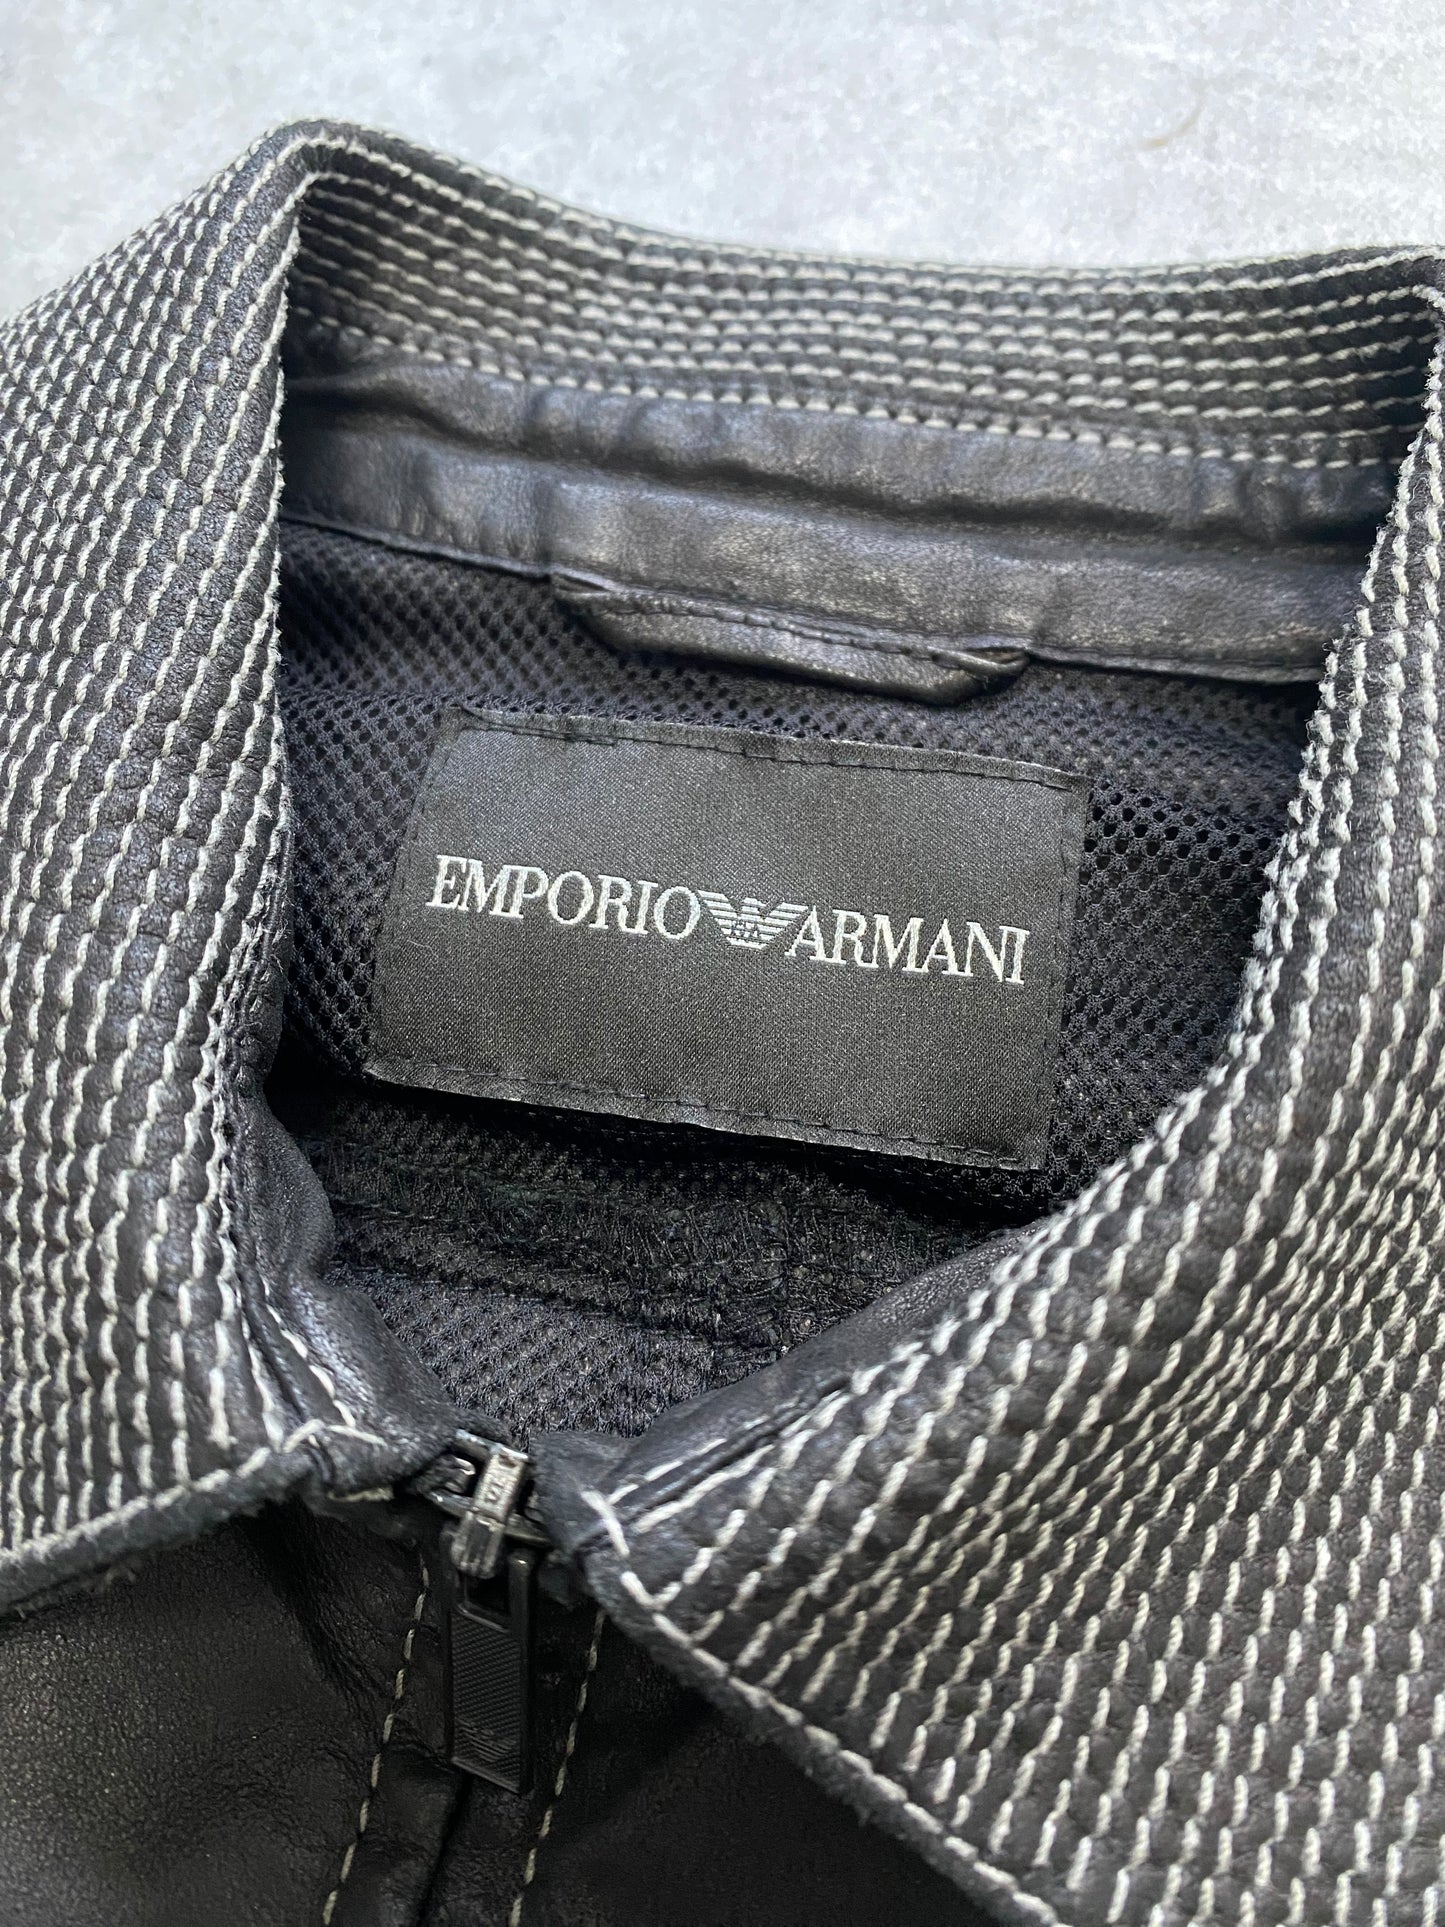 SS2007 Emporio Armani Topstitched Black Leather Jacket (M)